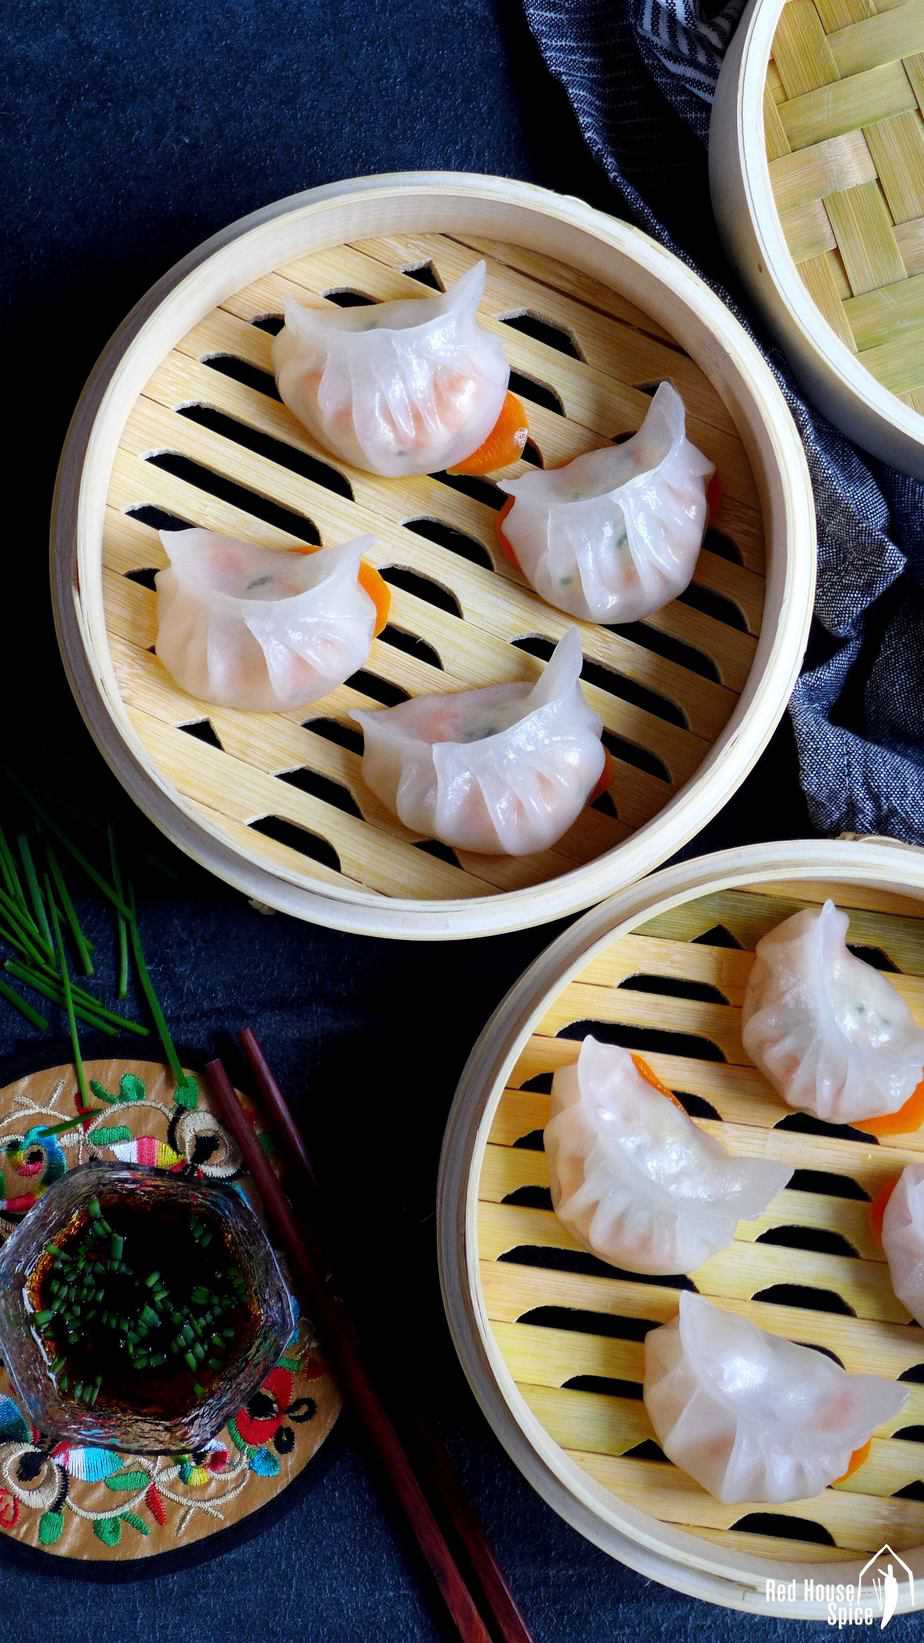 Har Gow, Crystal shrimp dumplings in steamer baskets